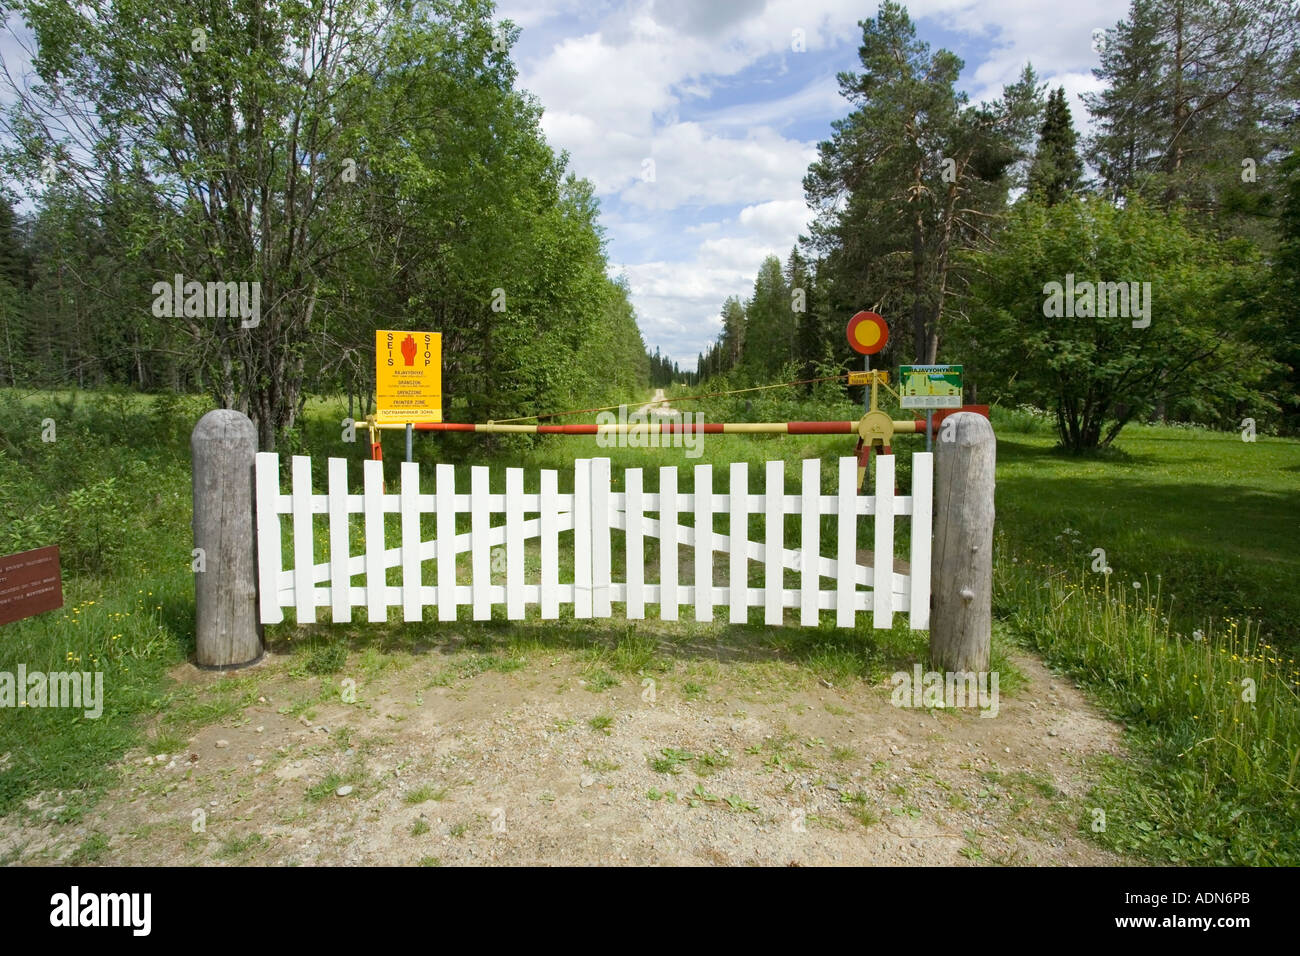 Frontier zone, Raate road, Finland Stock Photo